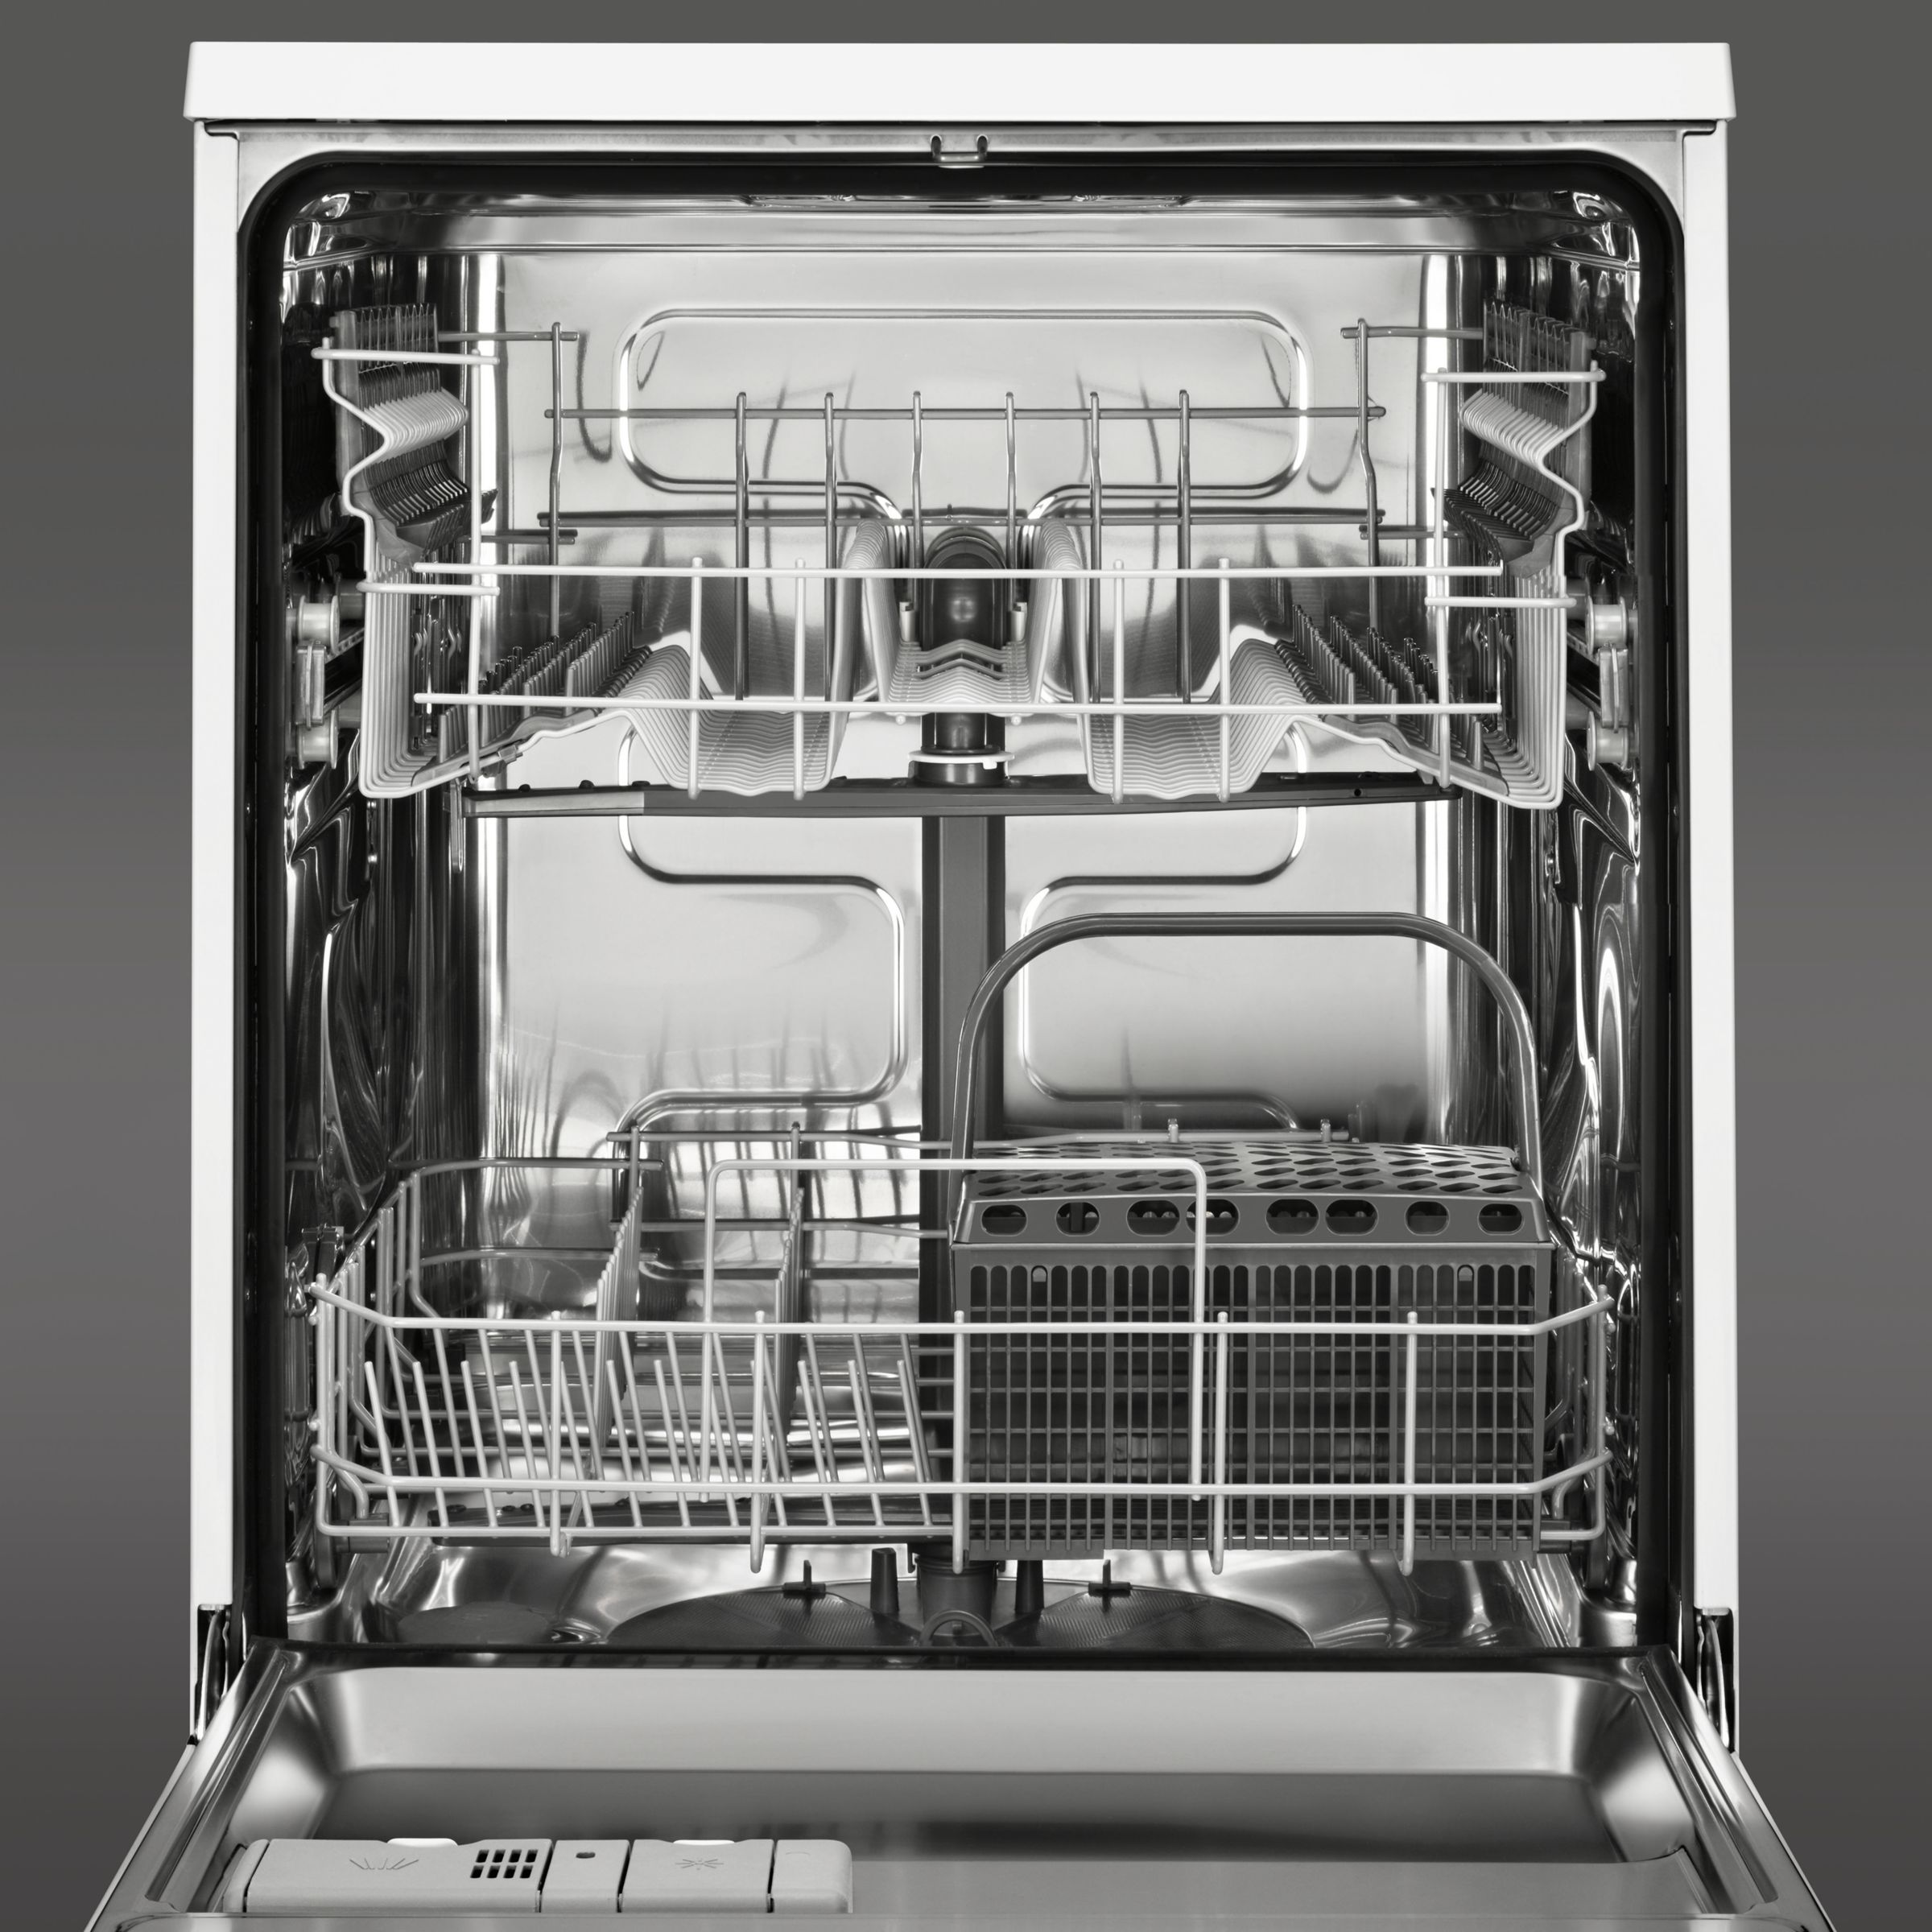 AEG F34300VI0 Integrated Dishwasher at 